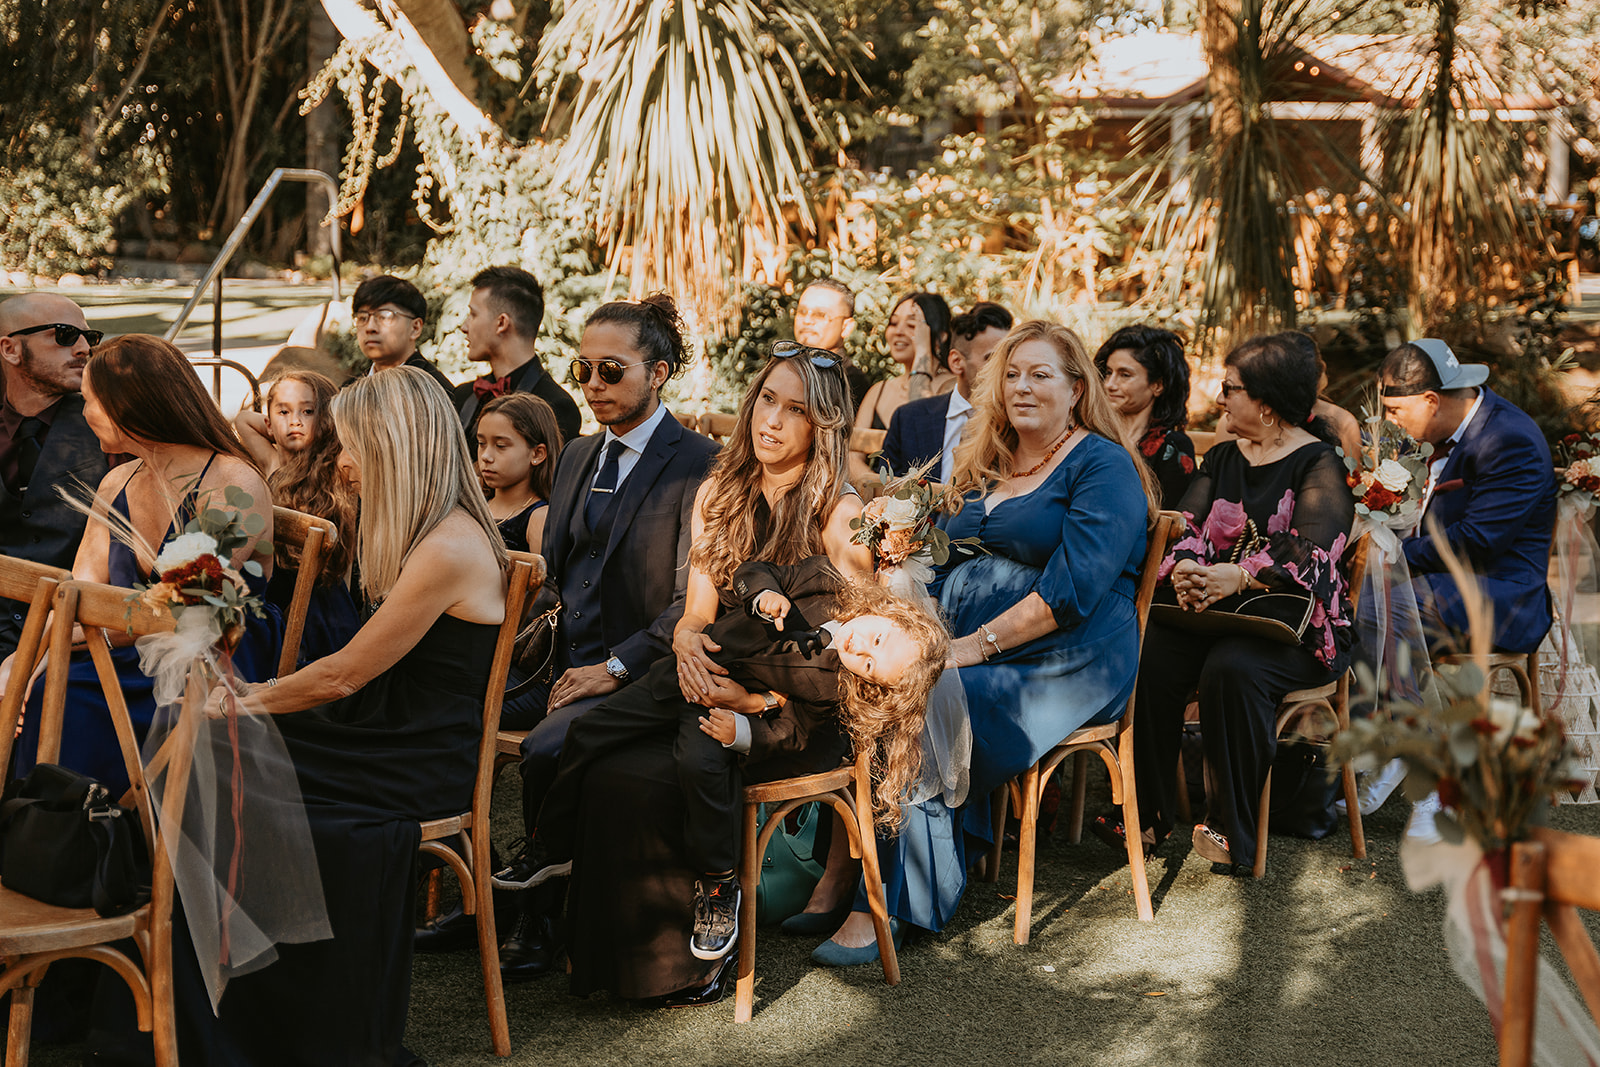 Fall-Themed Bohemian Wedding At Botanica  Oceanside